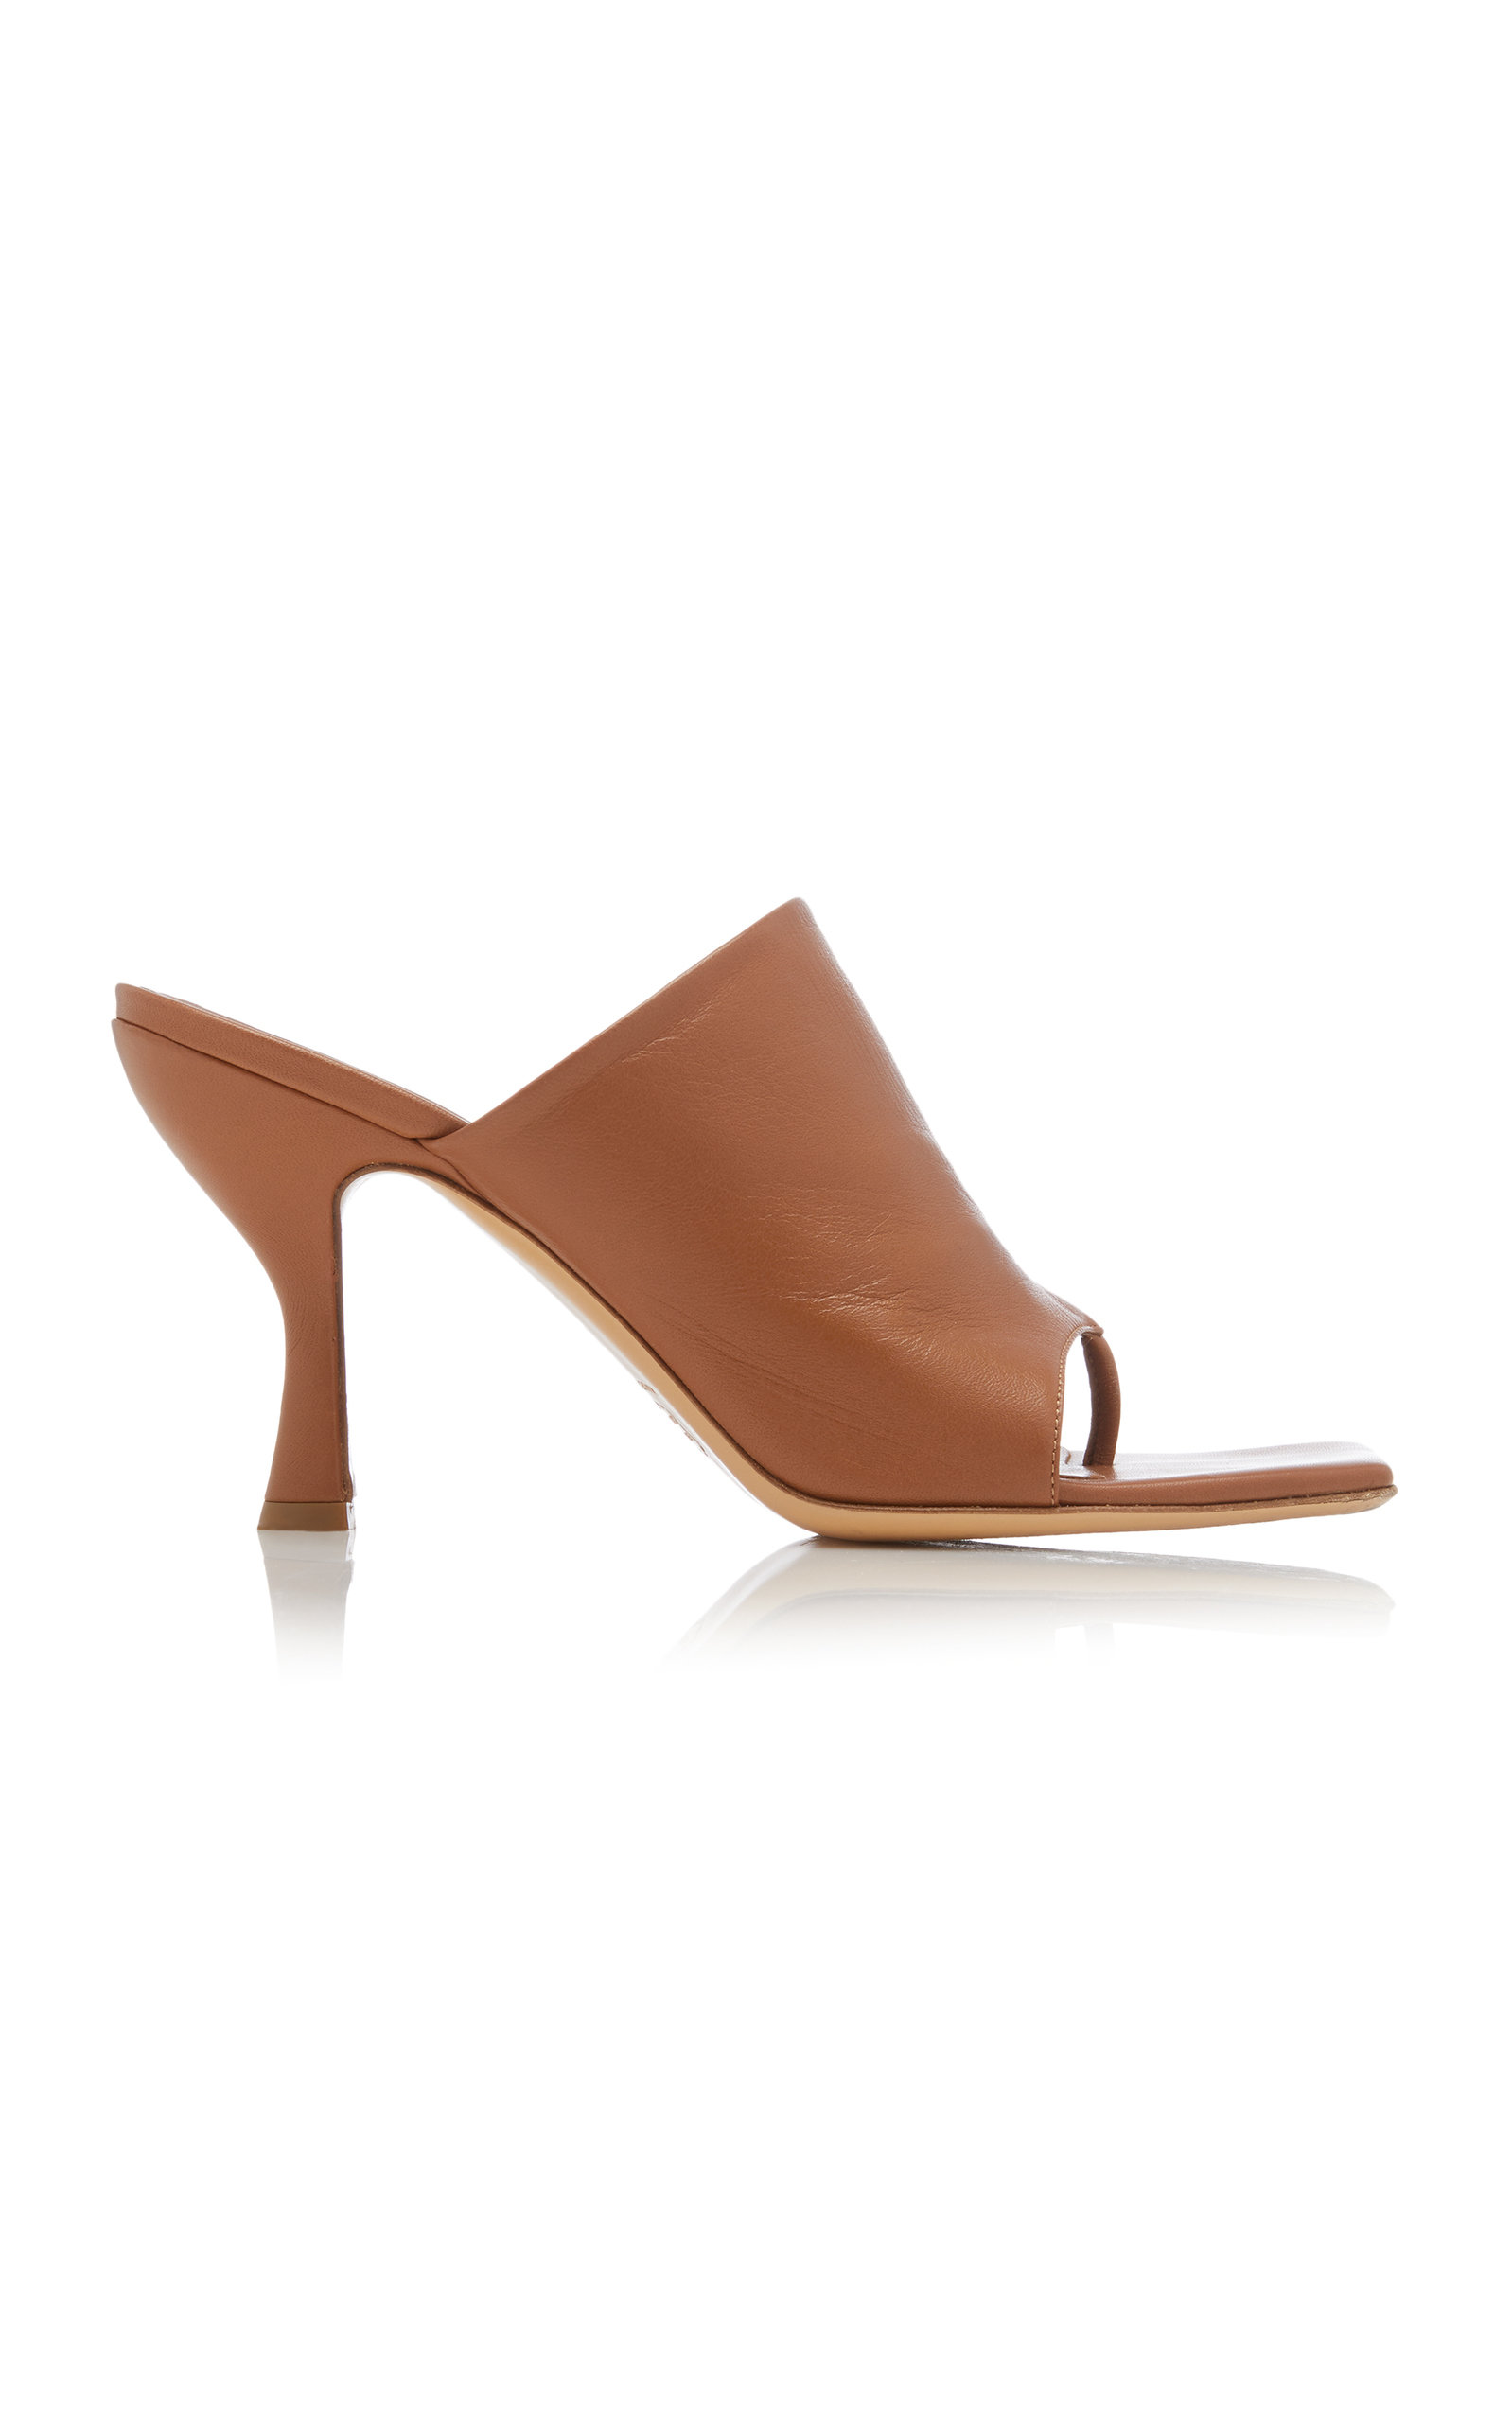 GIA x Pernille Teisbaek Women's Leather Sandals